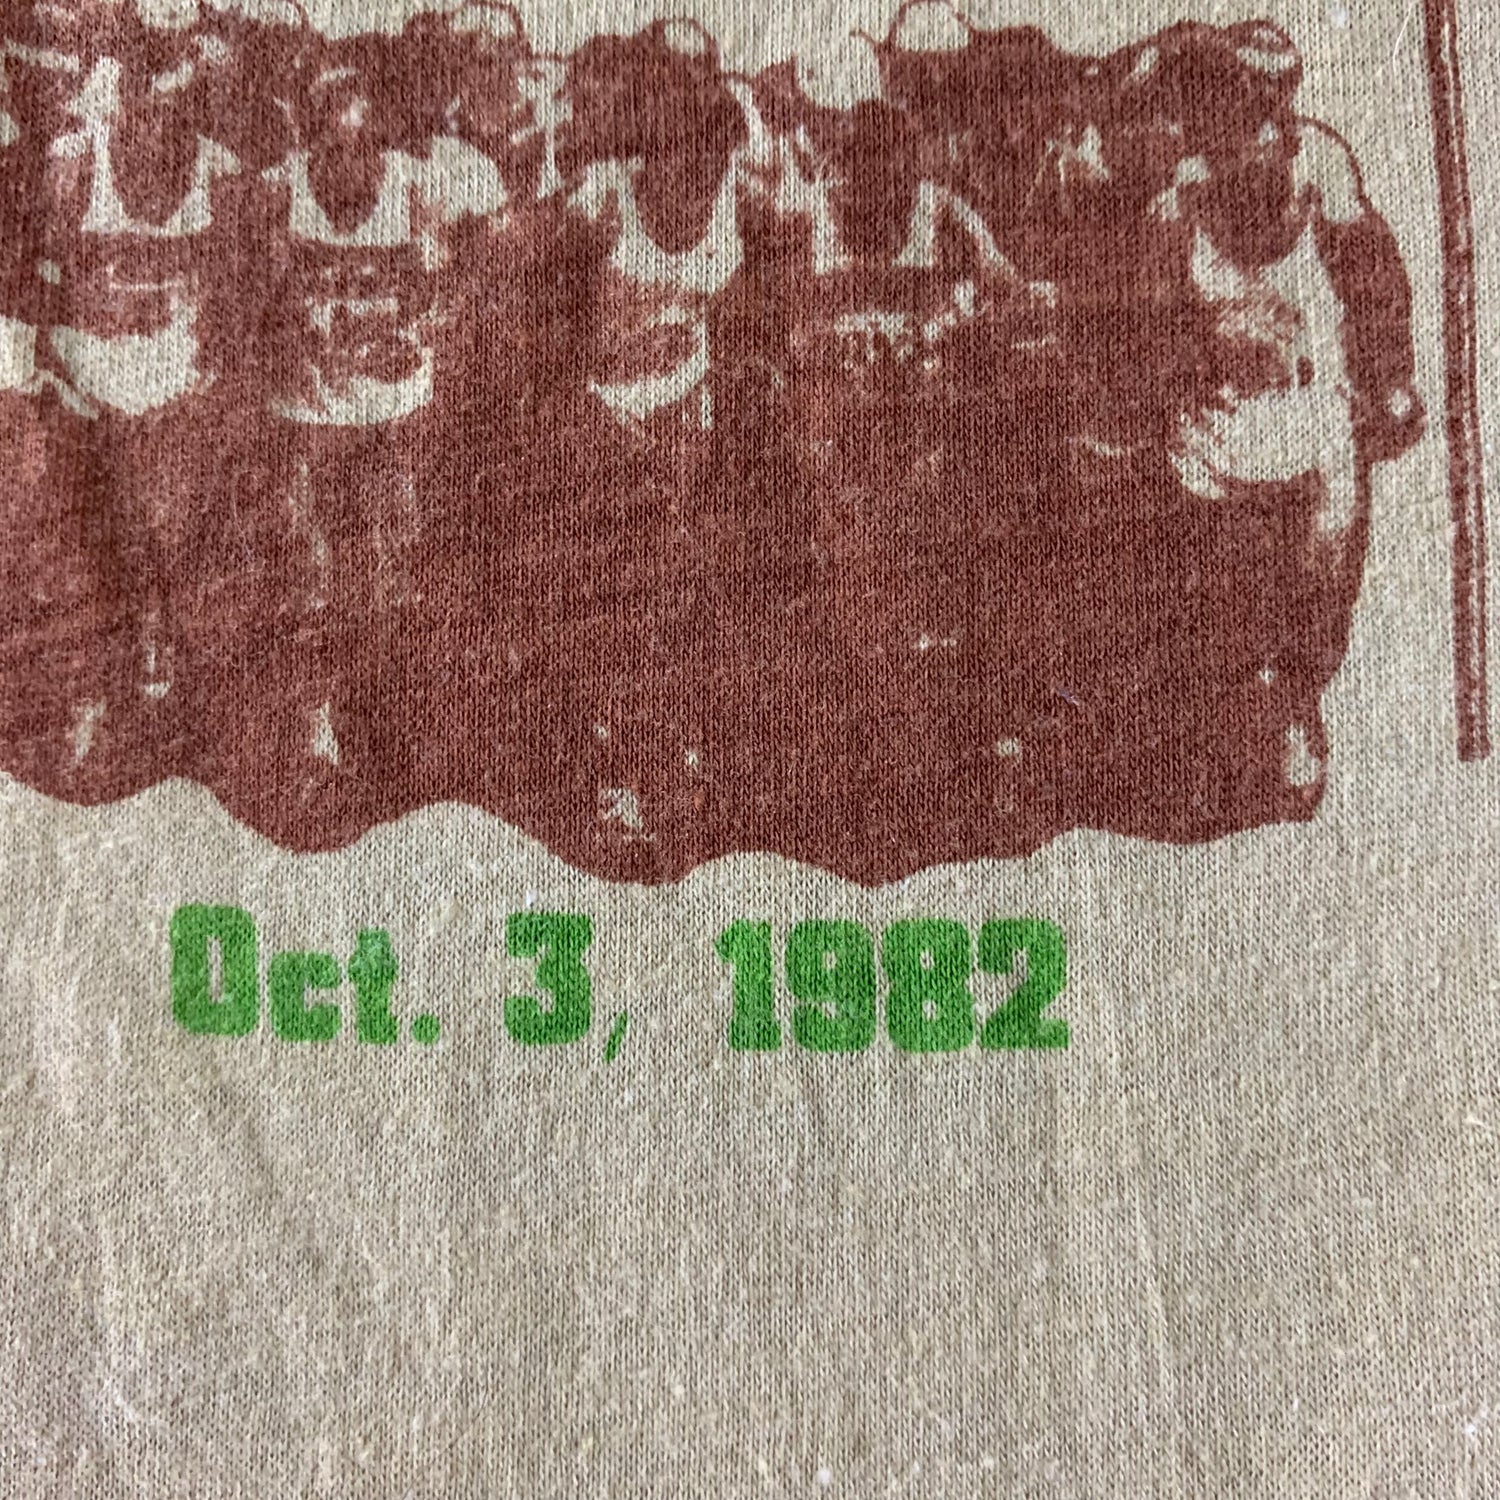 Vintage 1980s Marathon T-shirt size Medium